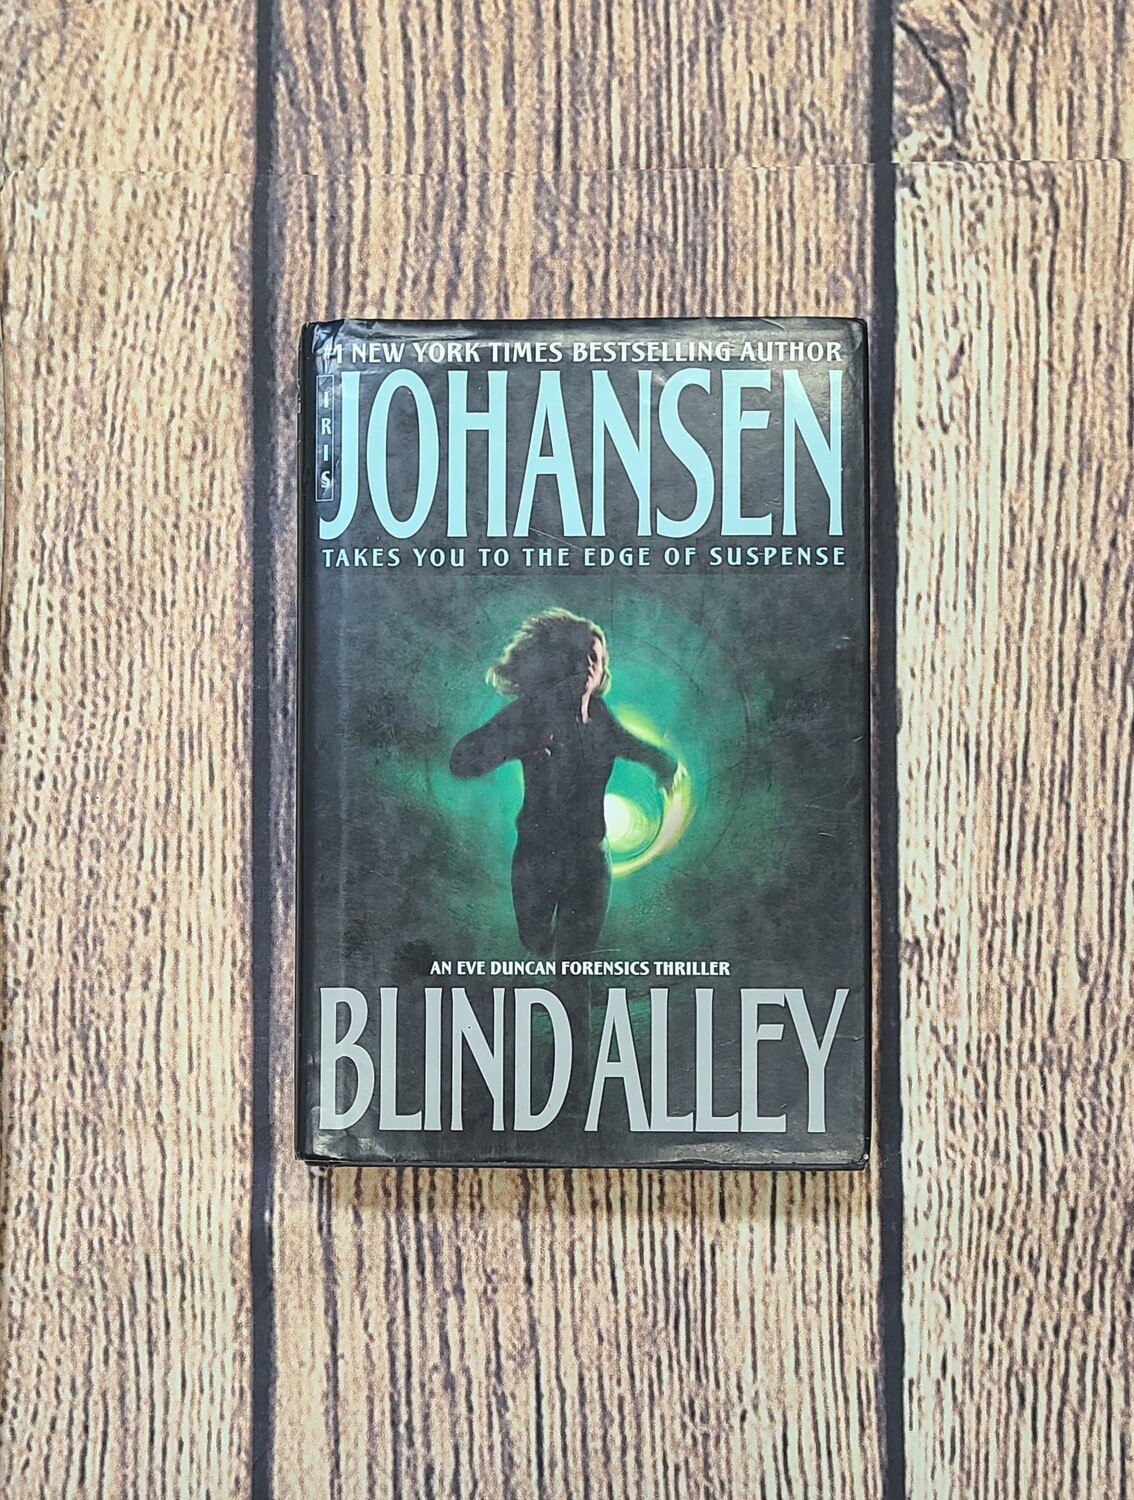 Blind Alley by Iris Johansen - Hardback